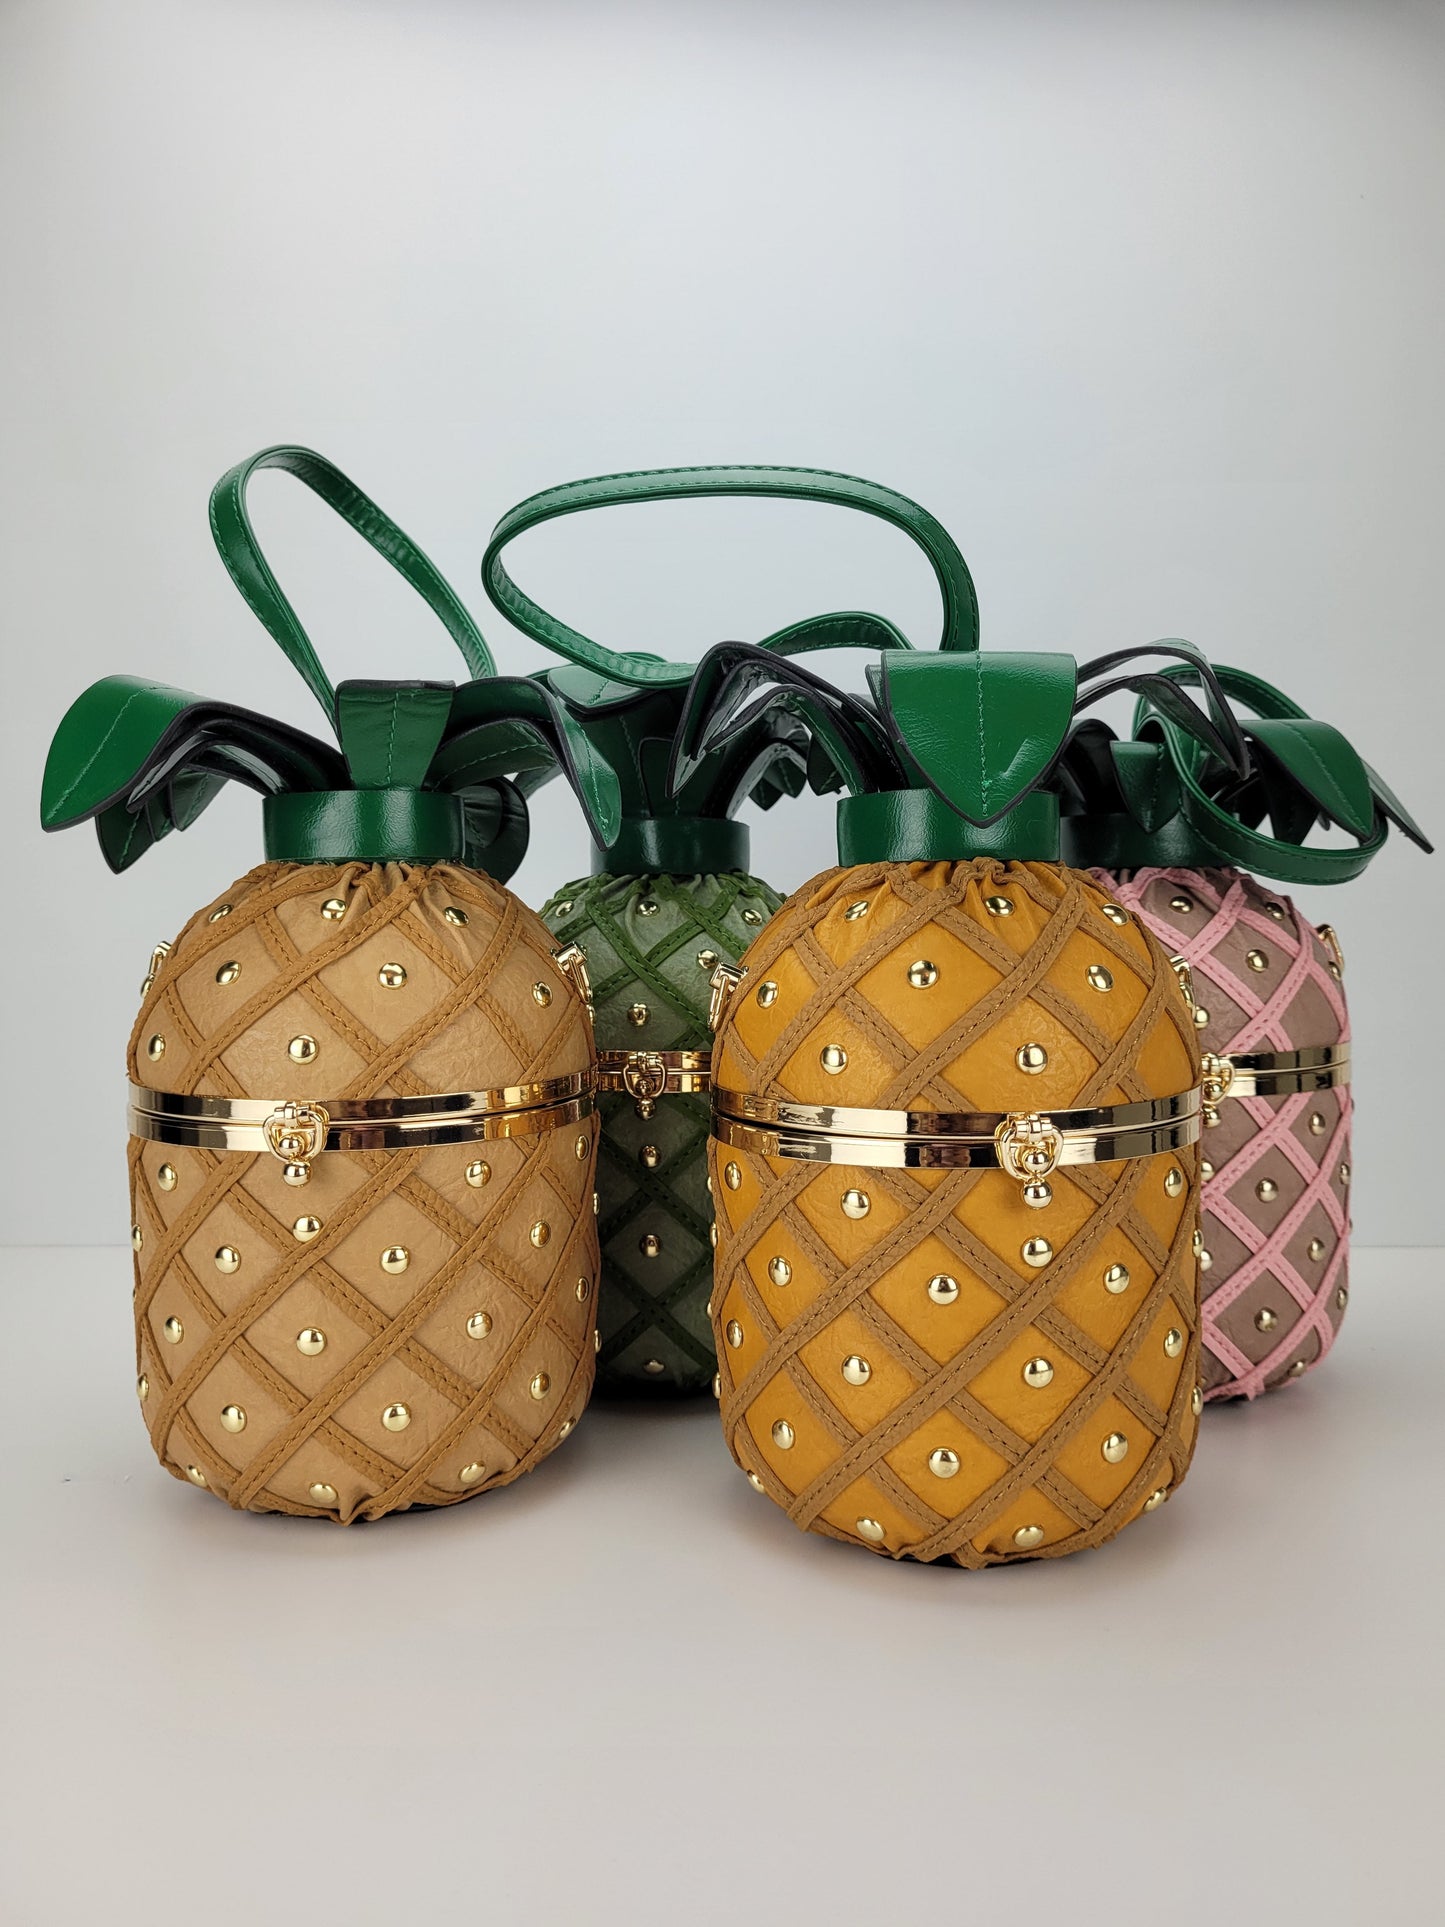 tan, green, yellow and pink pineapple handbags